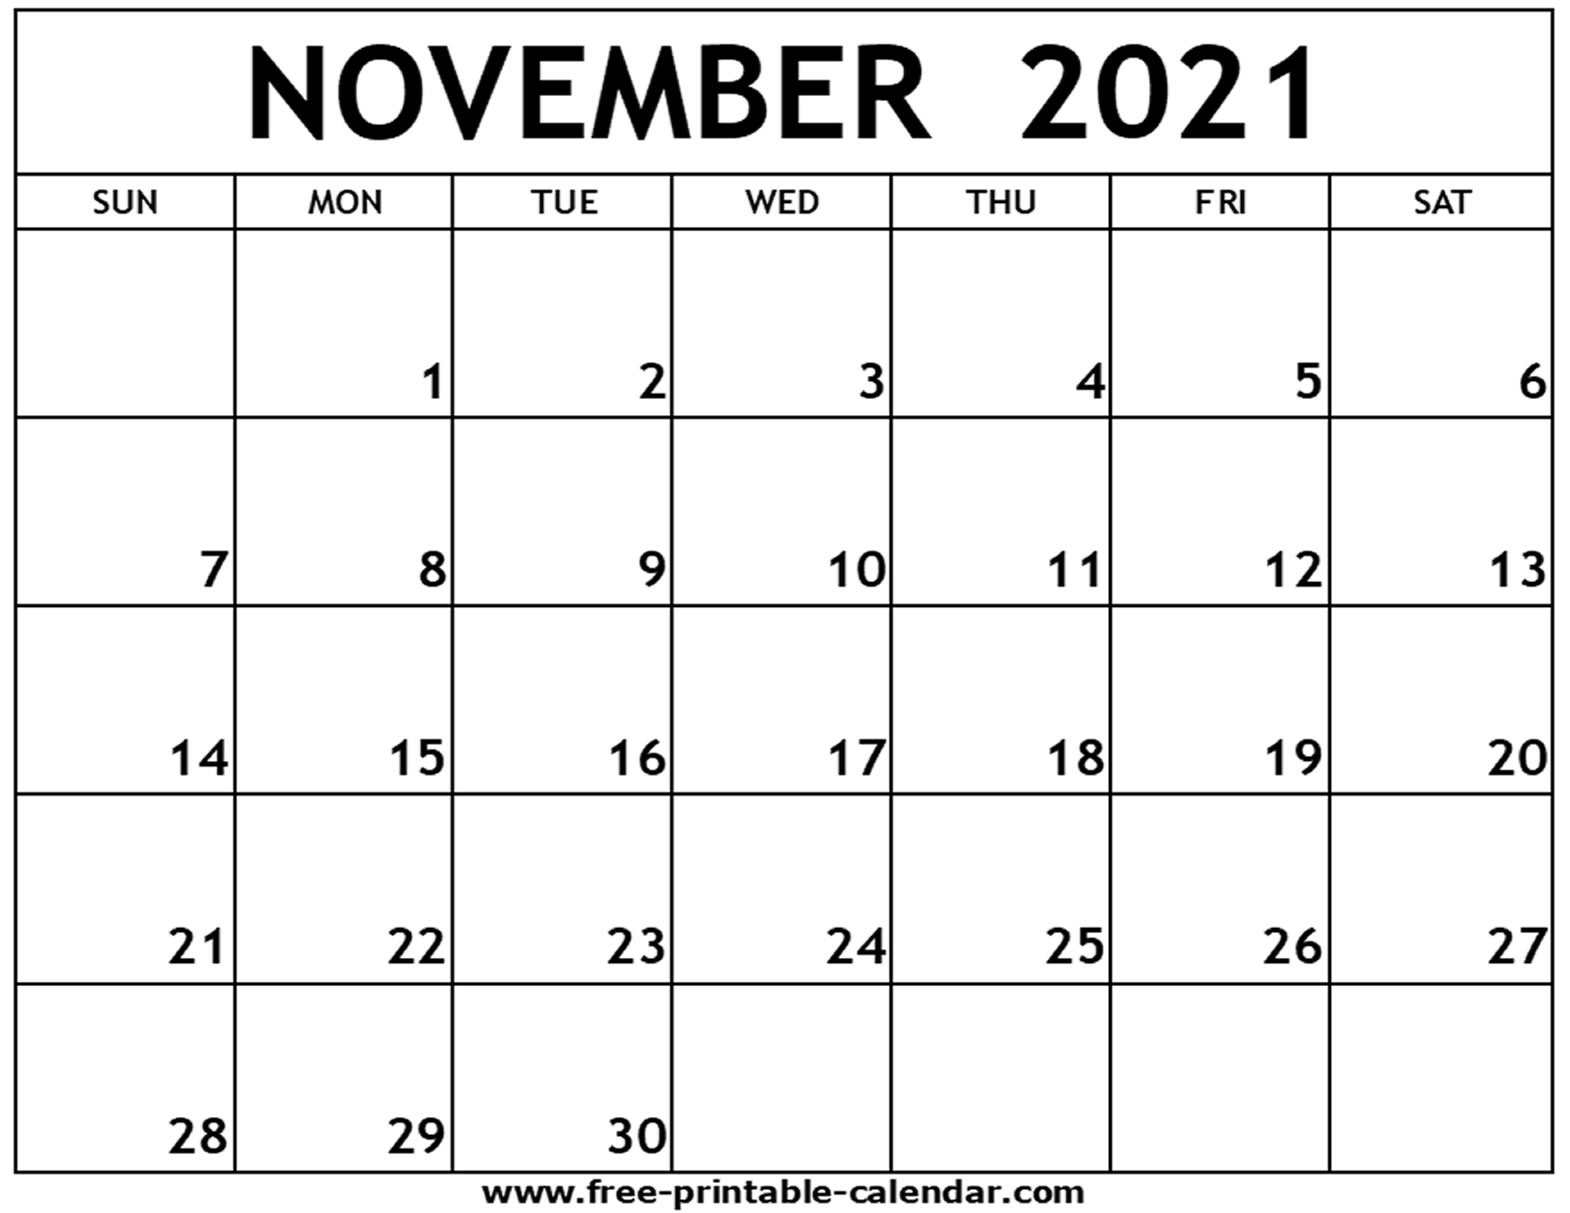 Catch 2021 Calender November